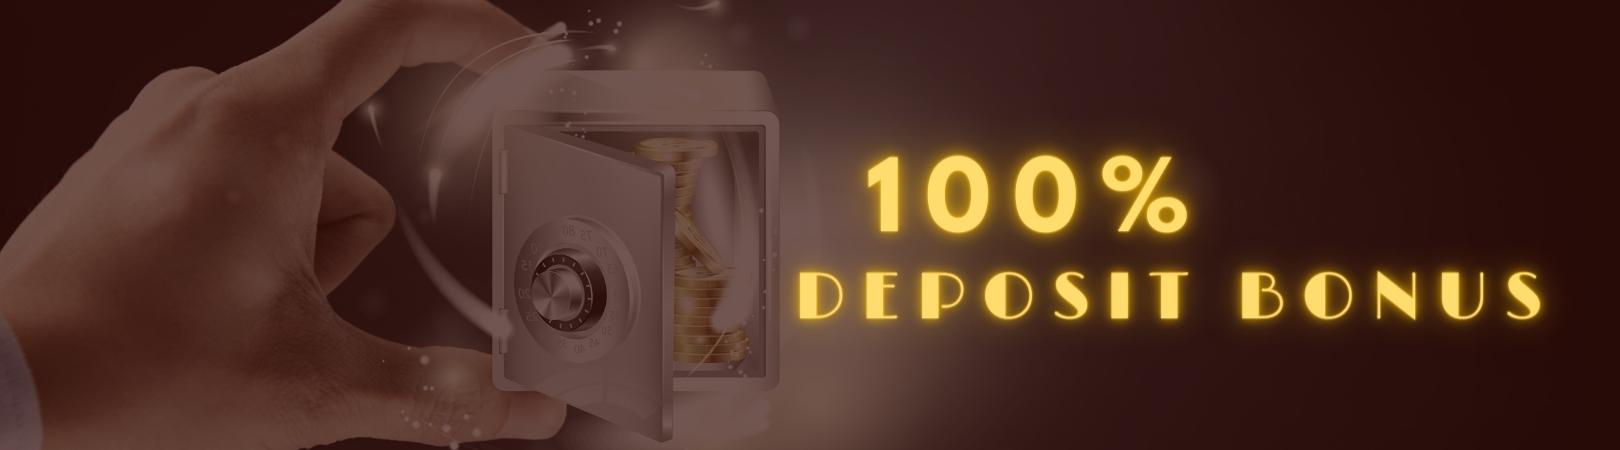 100% deposit bonus img